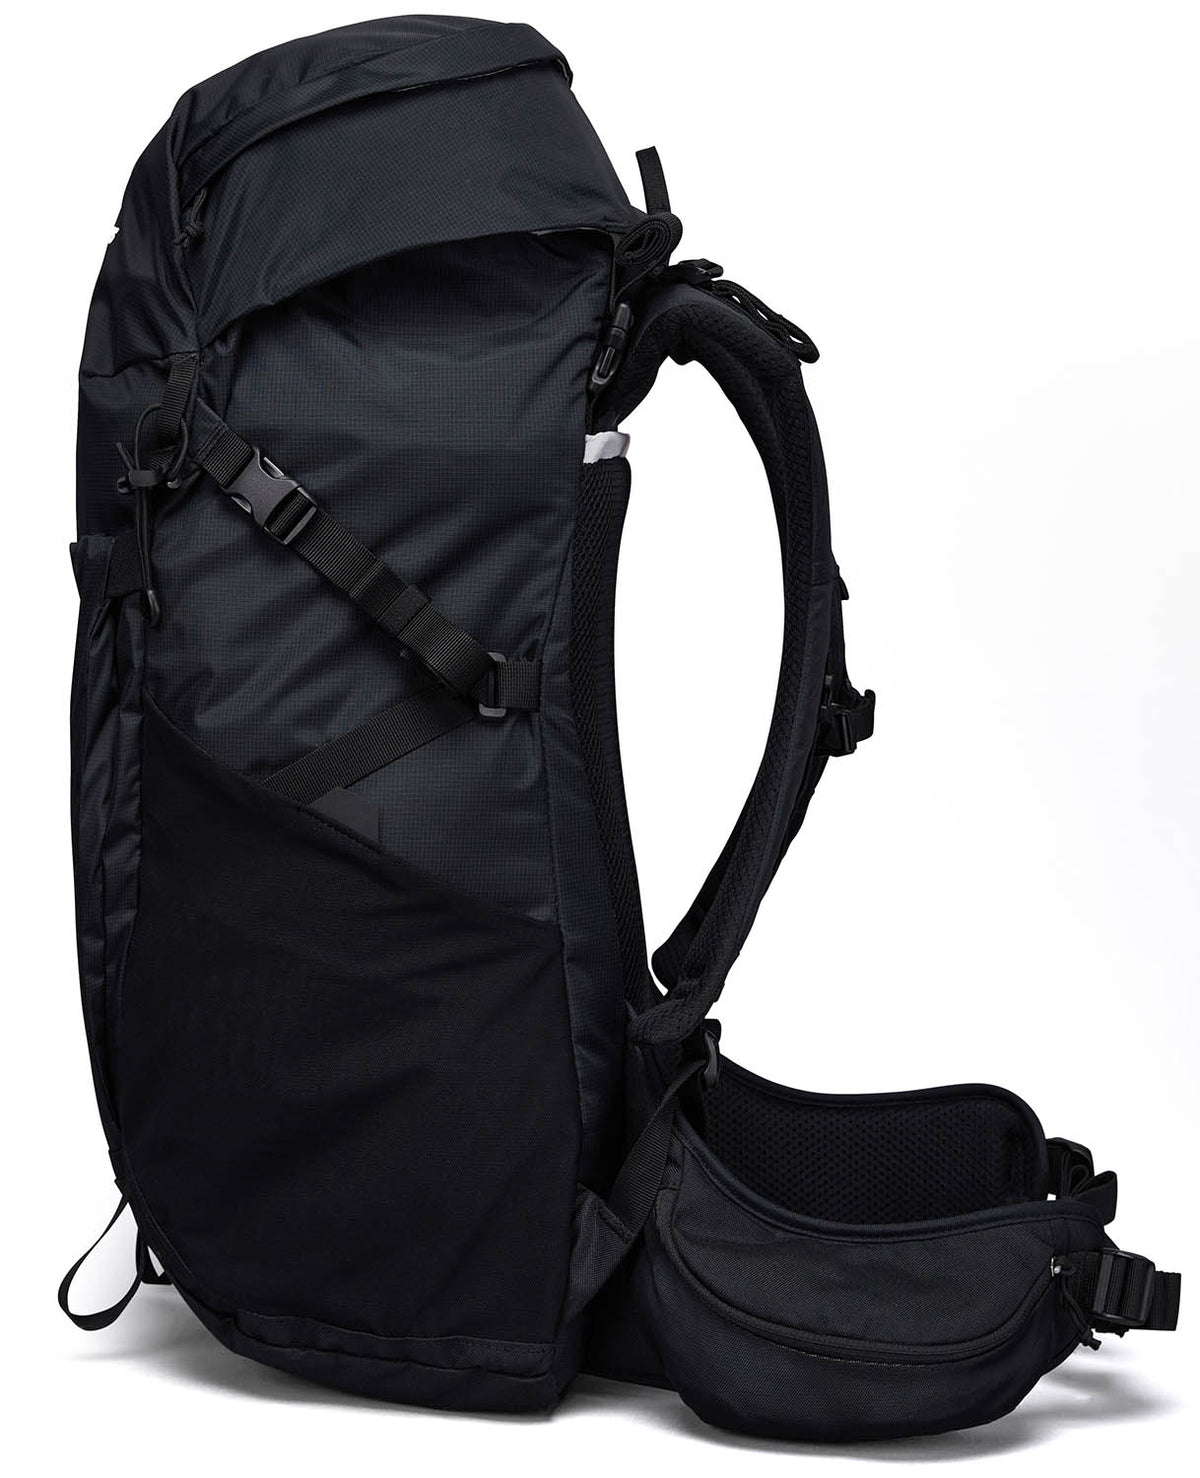 Berghaus Remote Hike 35L Backpack - Black / Black